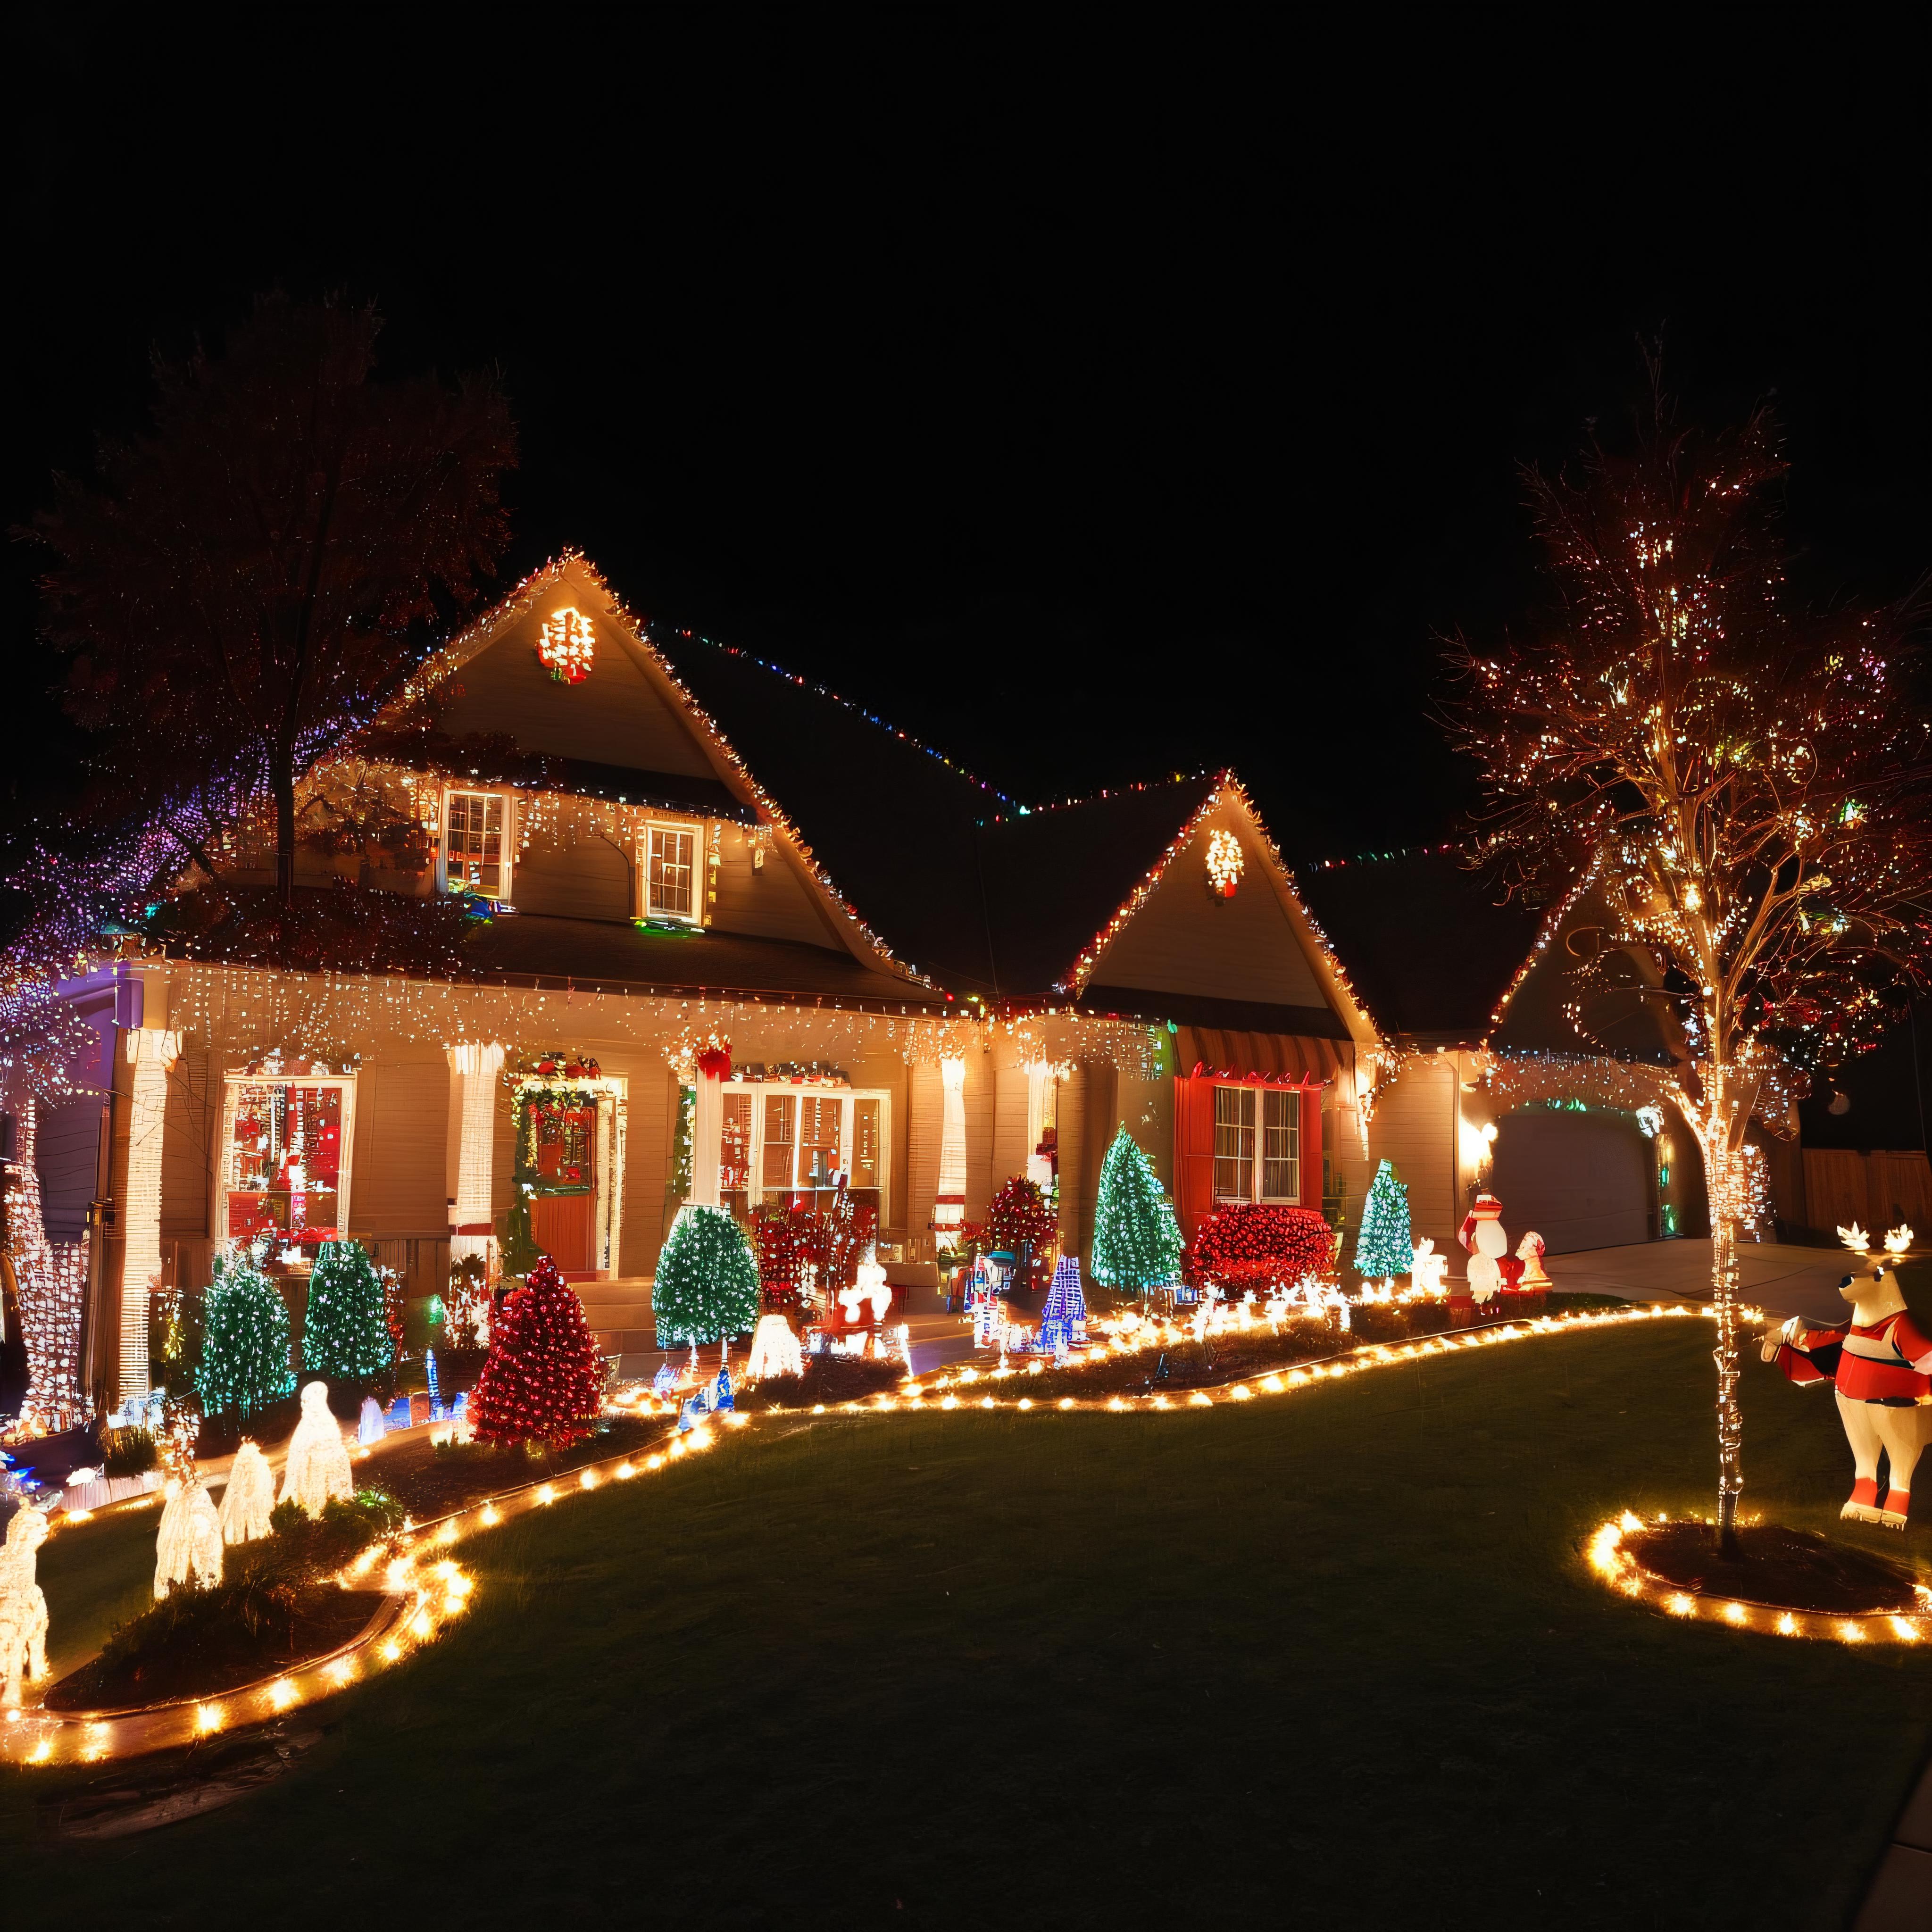 Christmas Lights image by totes